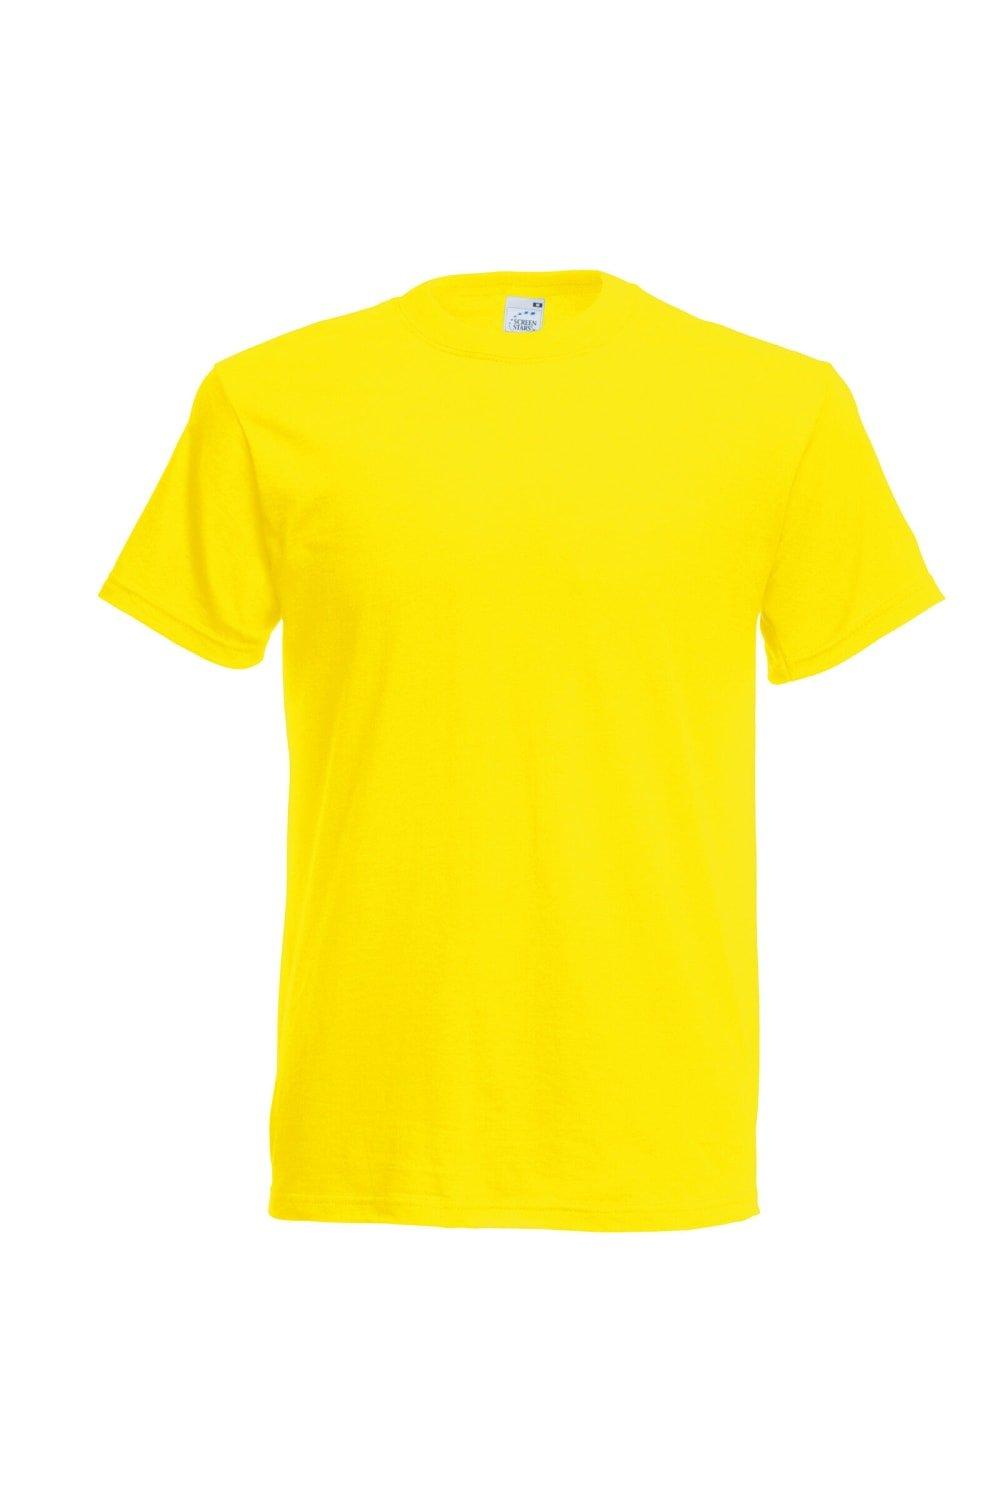 Оригинальная футболка с коротким рукавом Fruit of the Loom, желтый